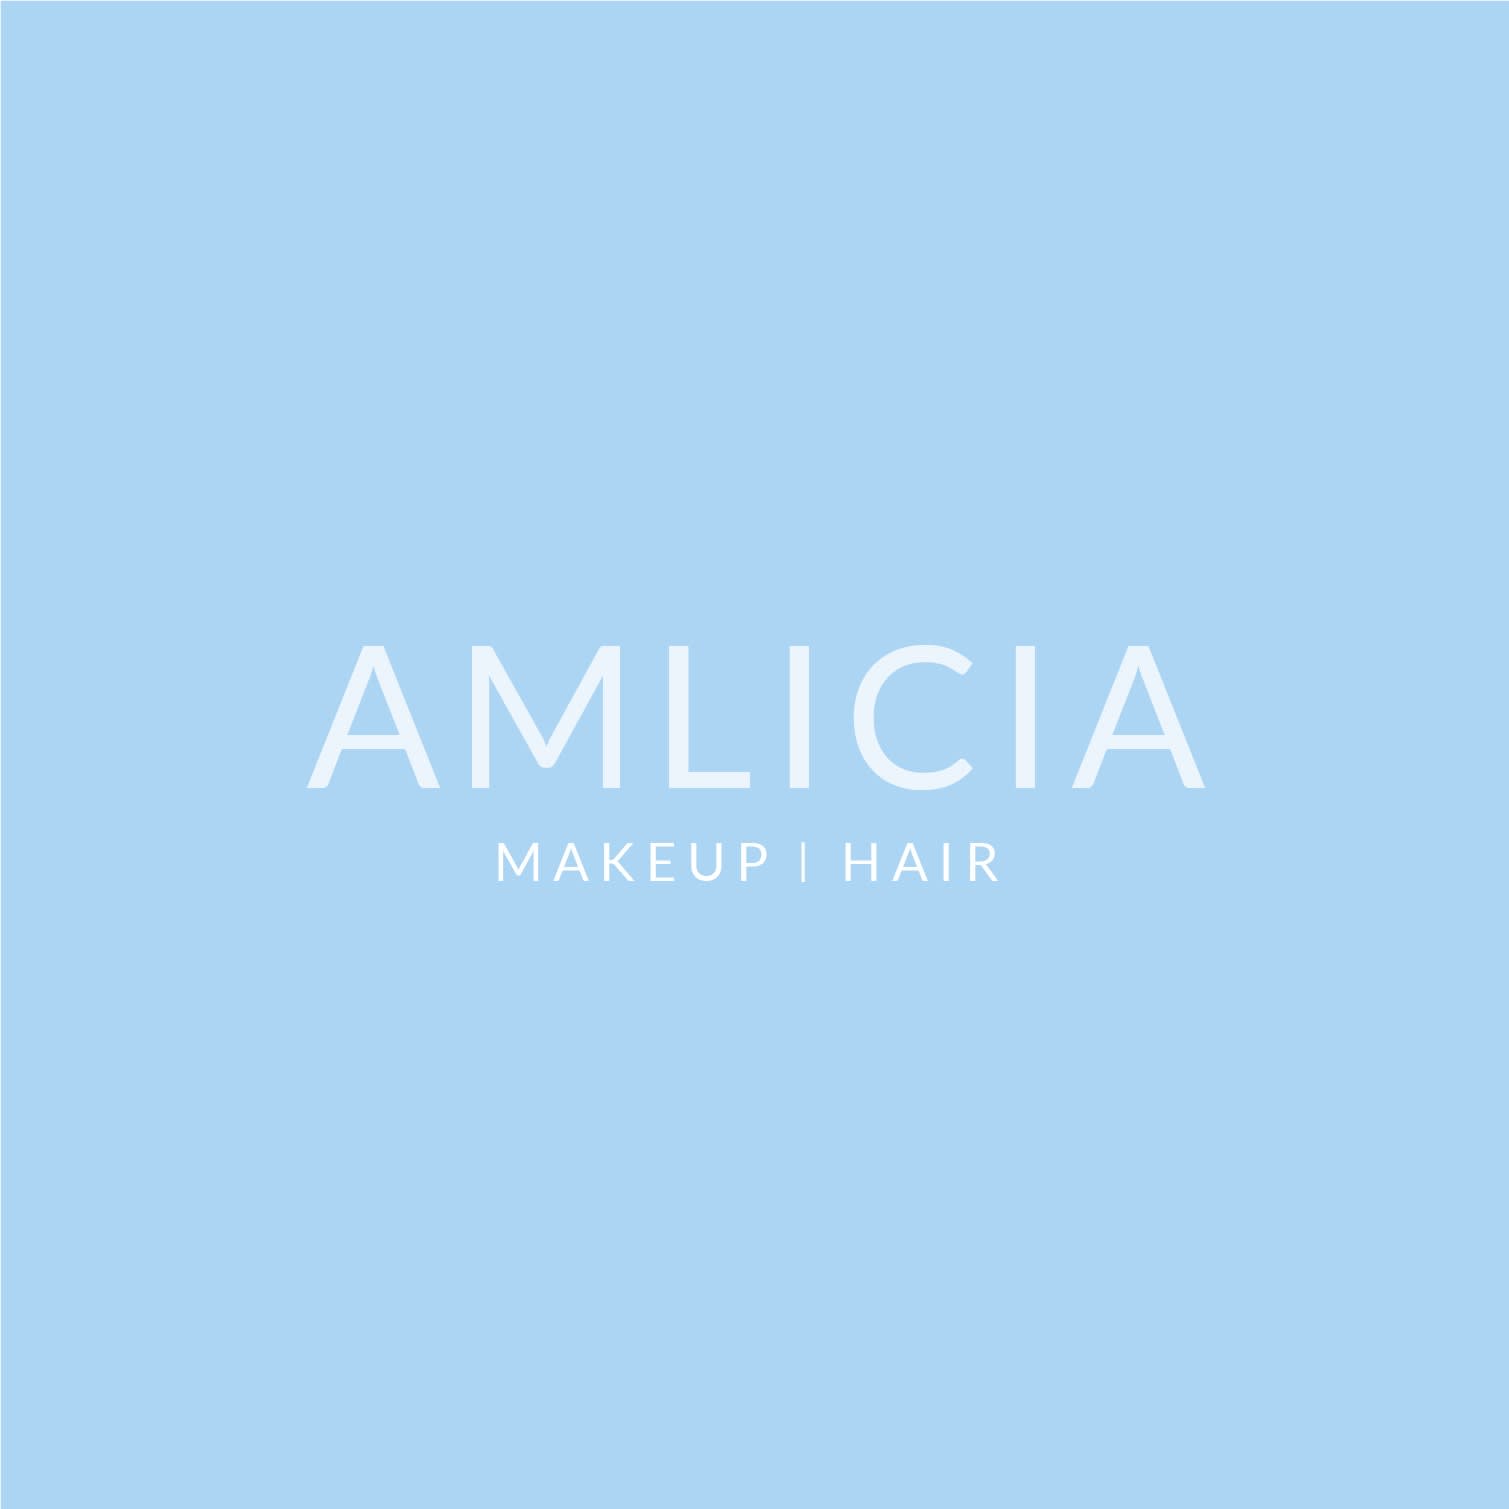 Amlicia Makeup and Hair